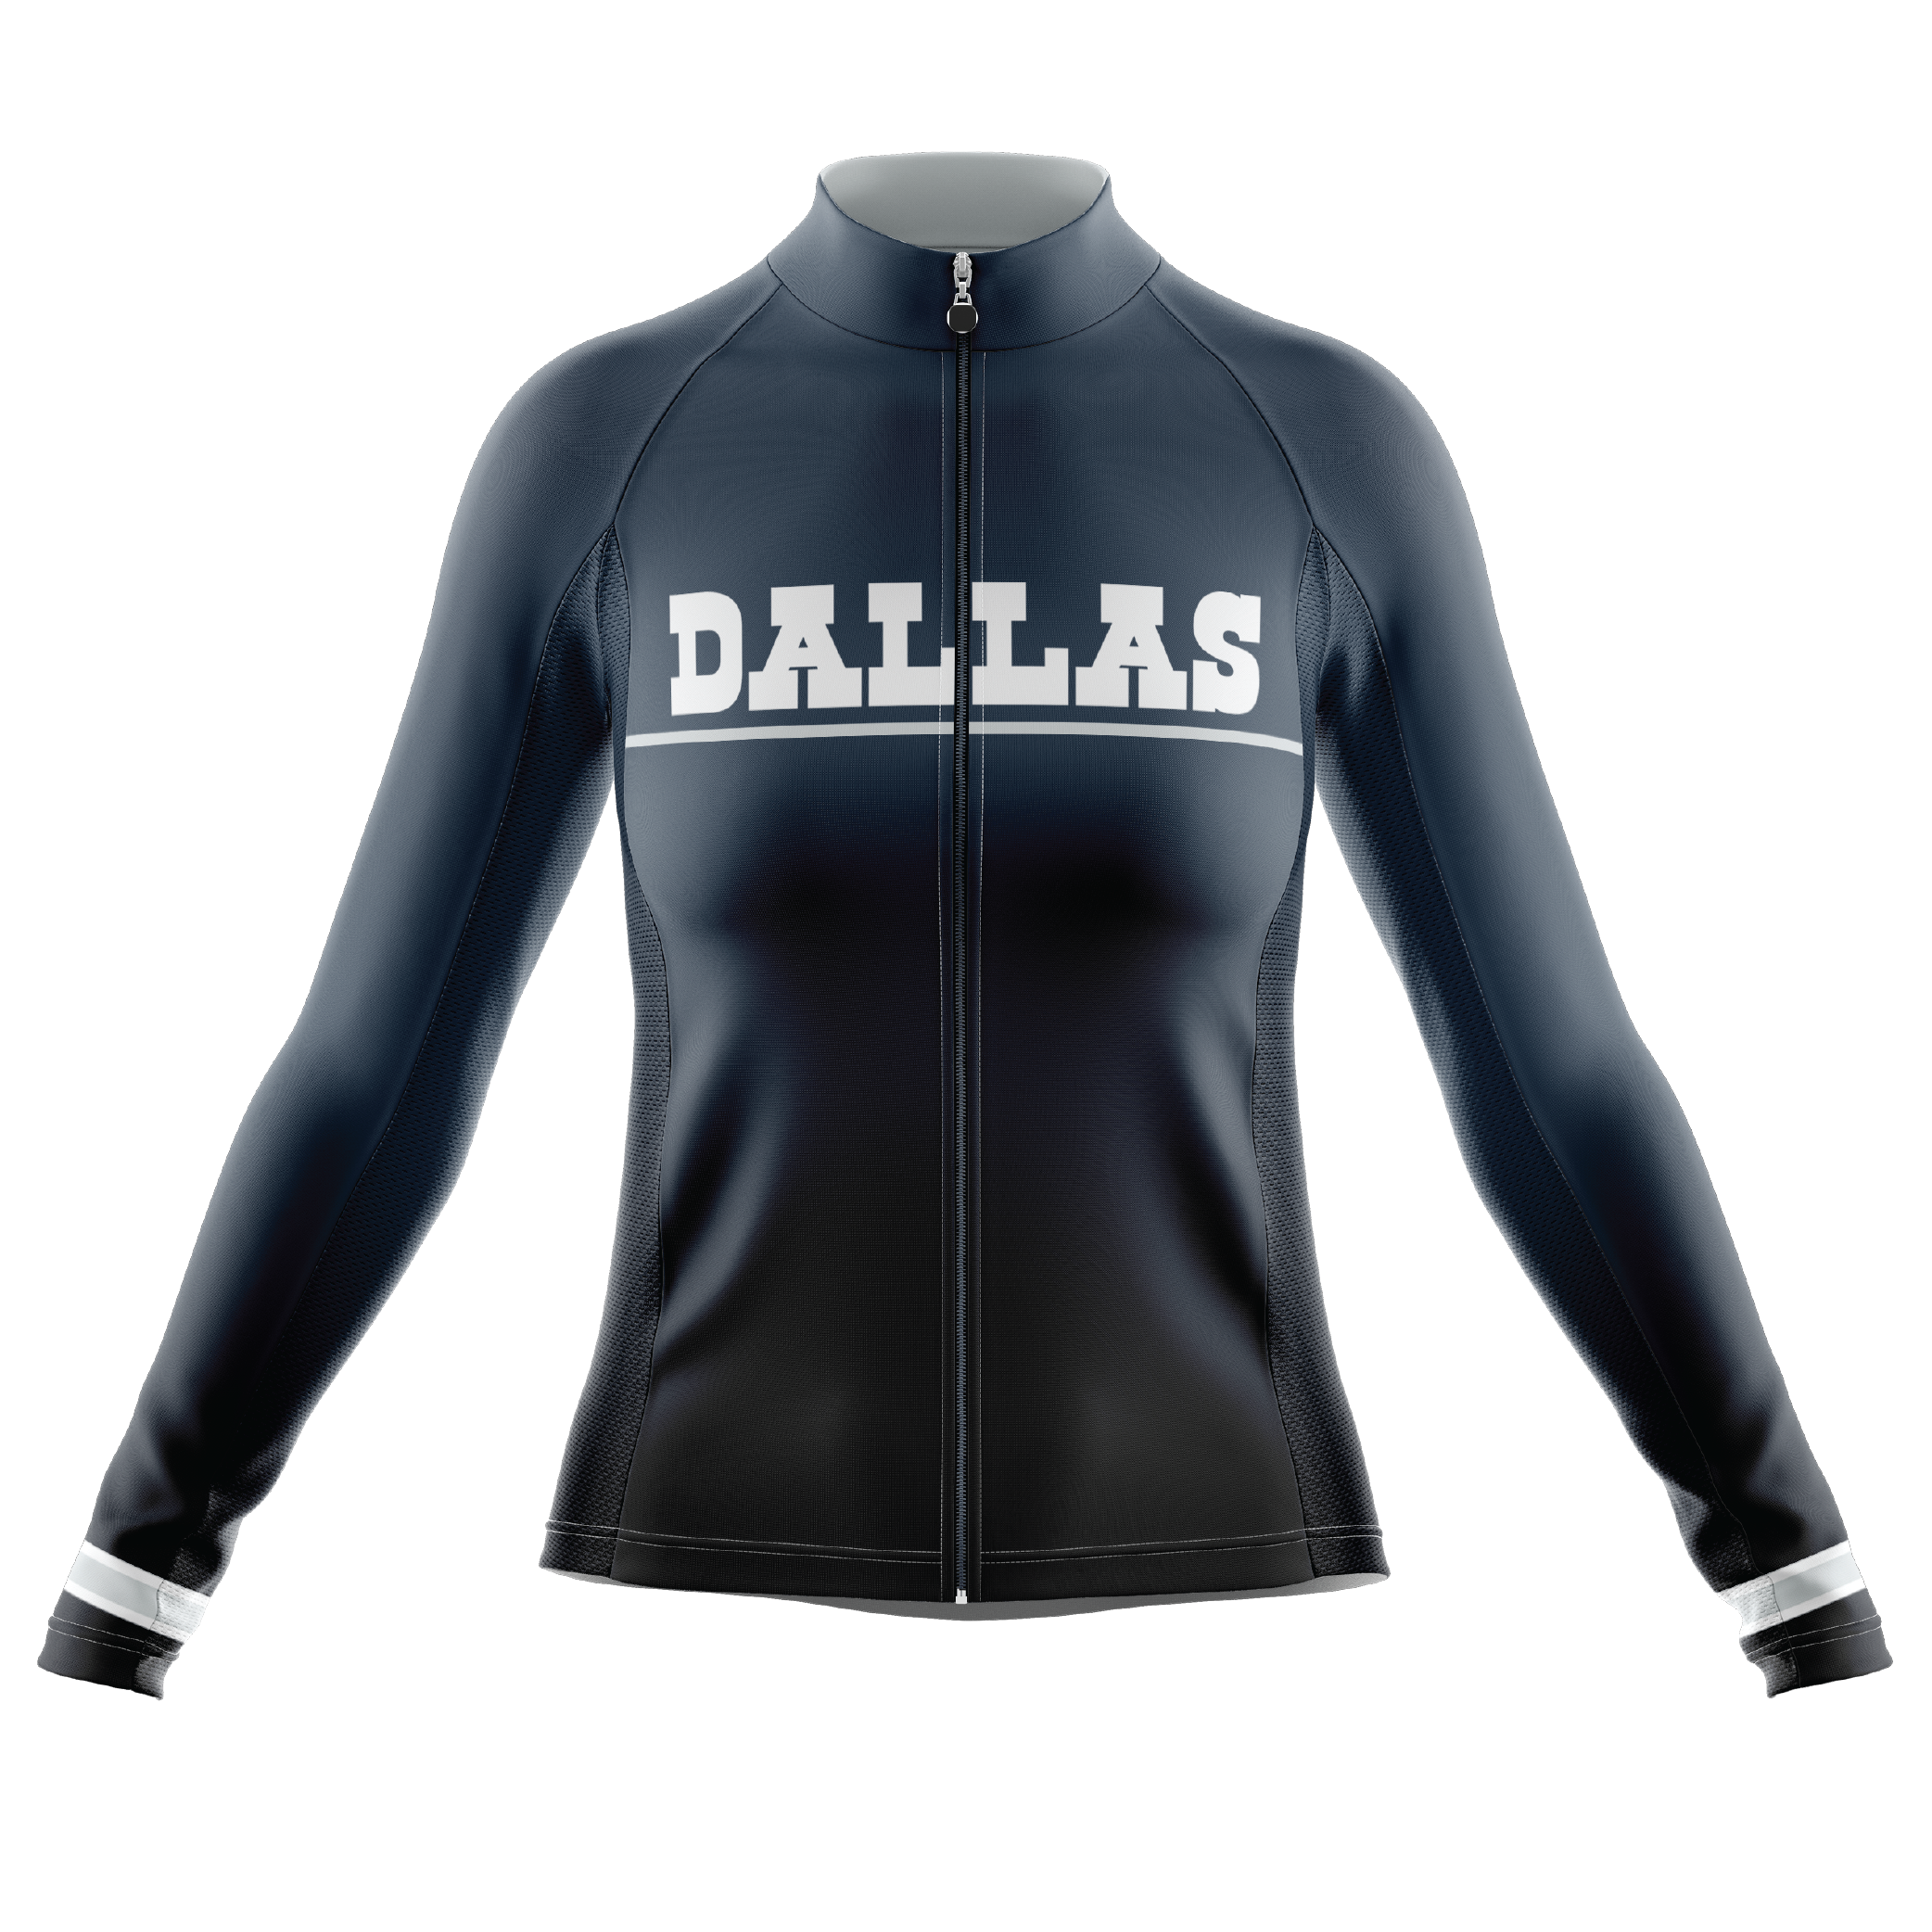 Dallas Long Sleeve Cycling Jersey